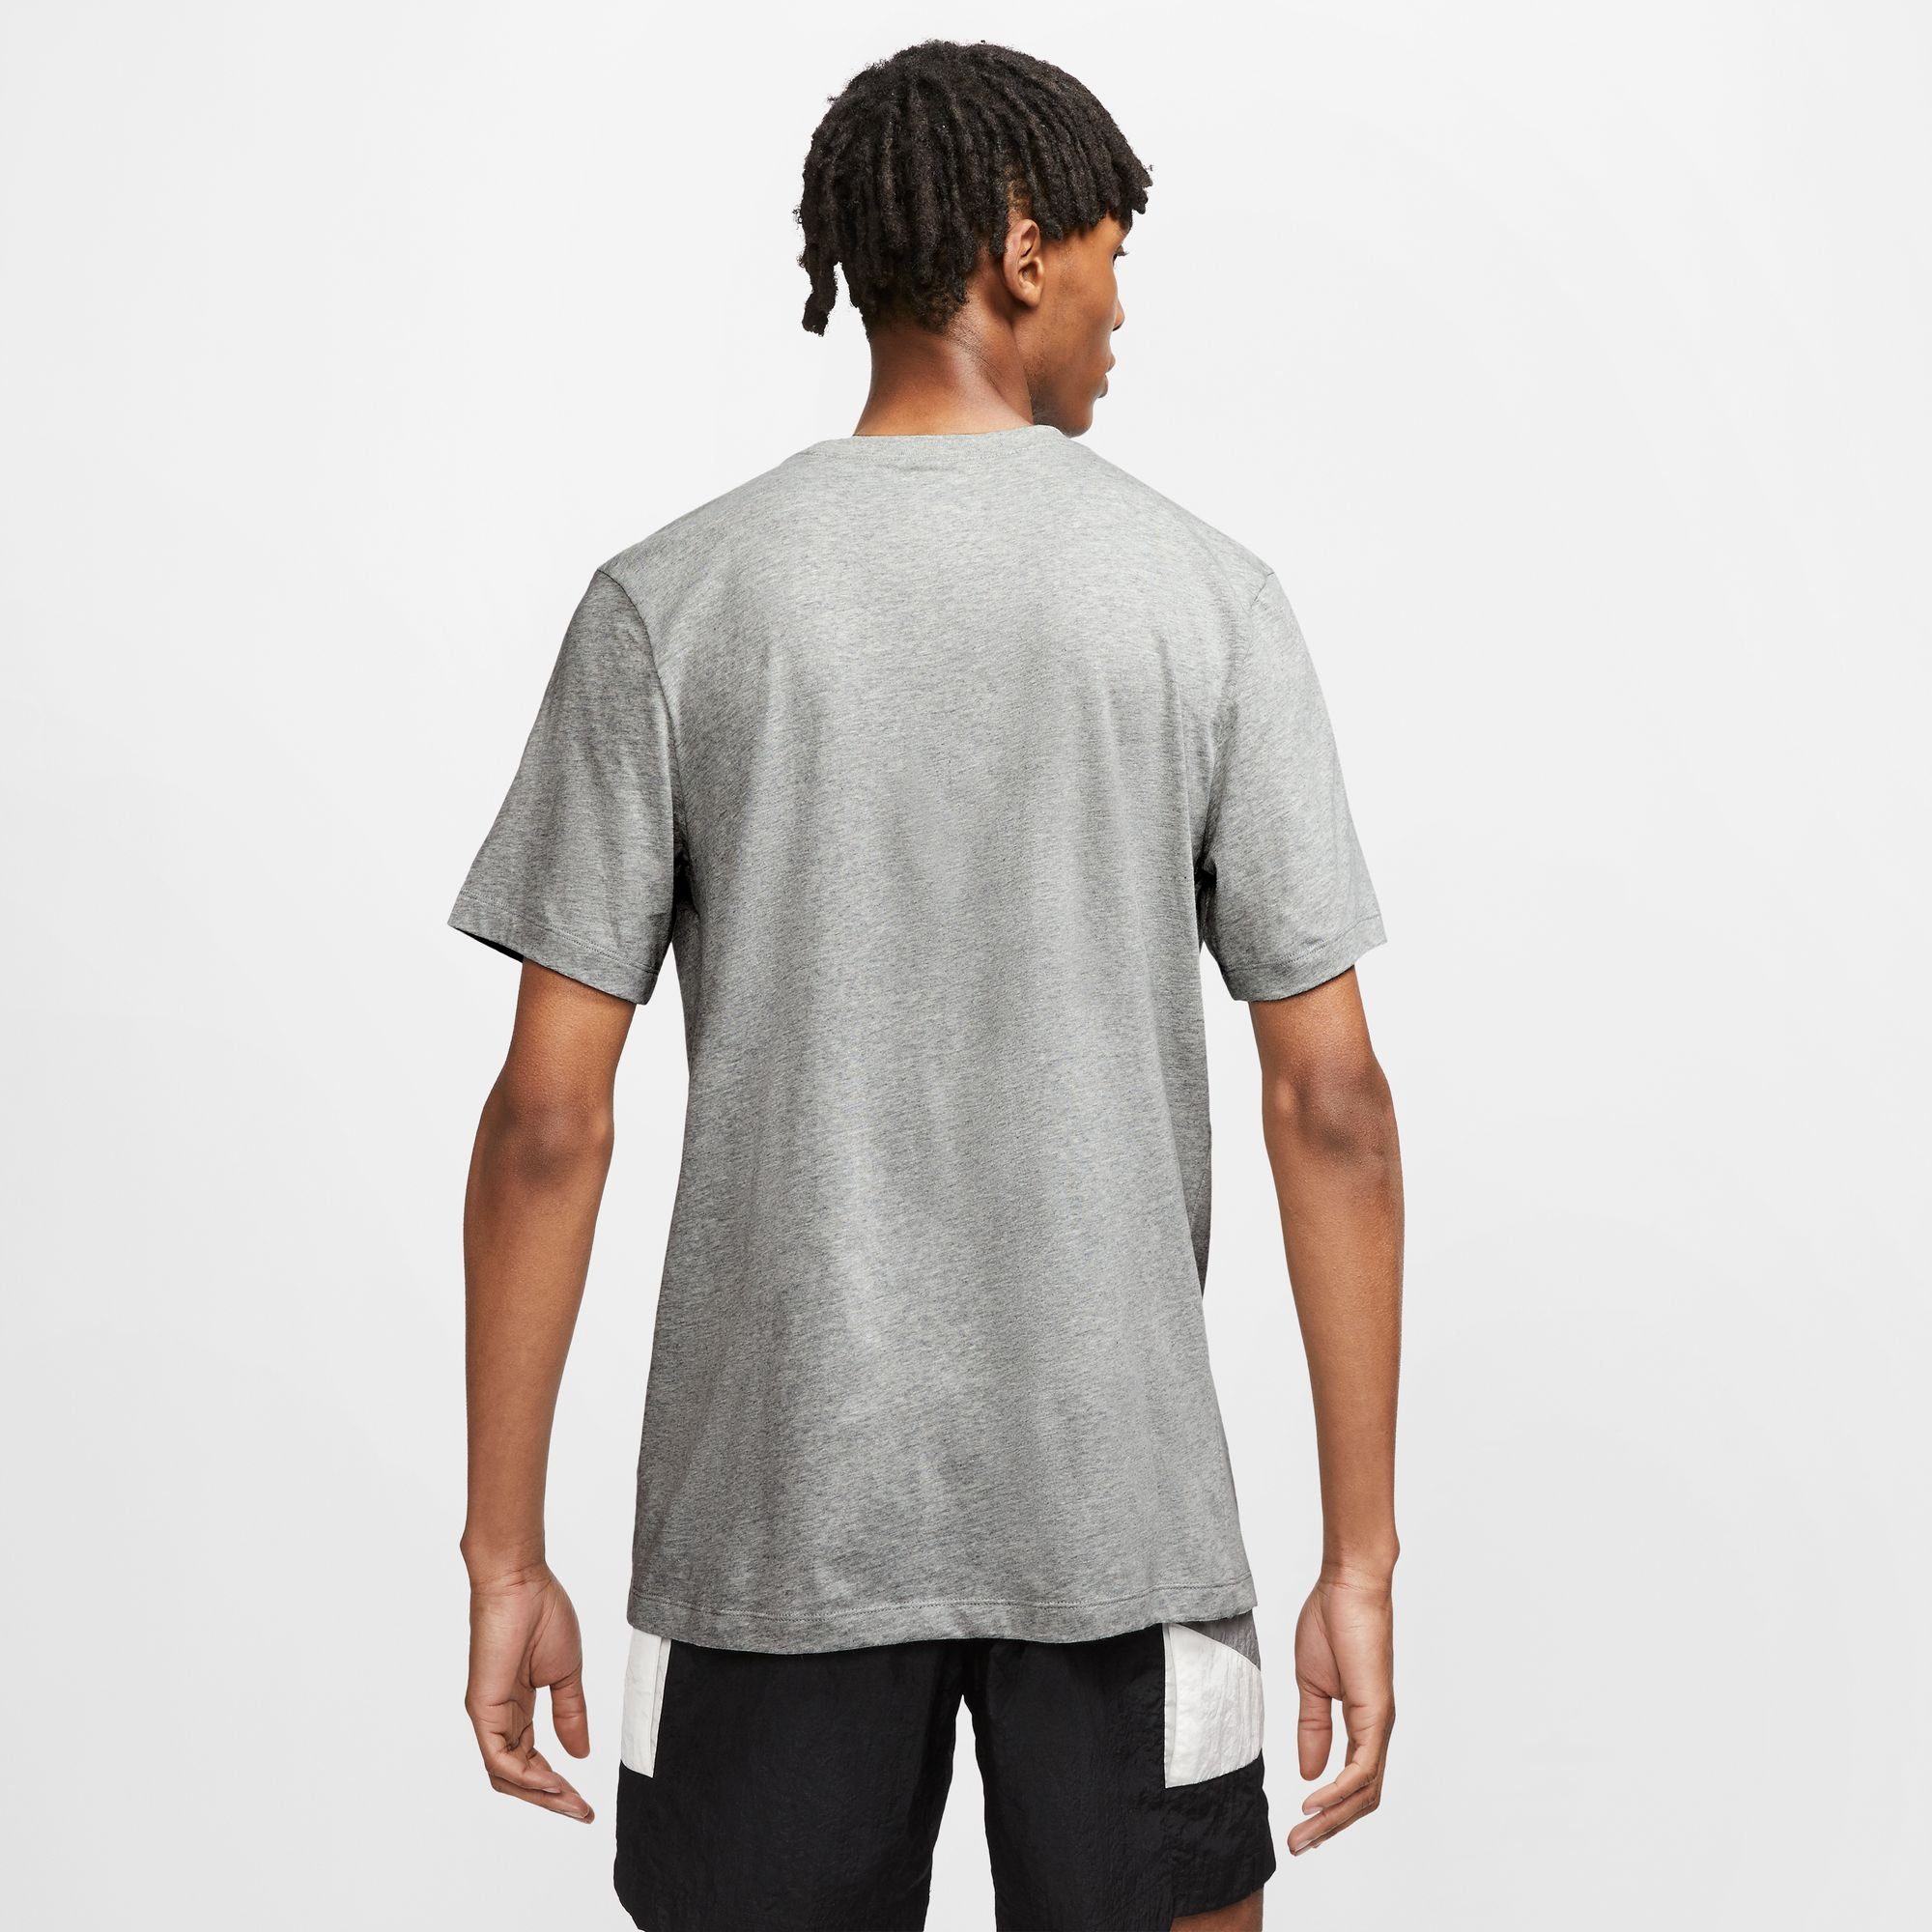 T-Shirt MEN'S CLUB grau Sportswear T-SHIRT Nike